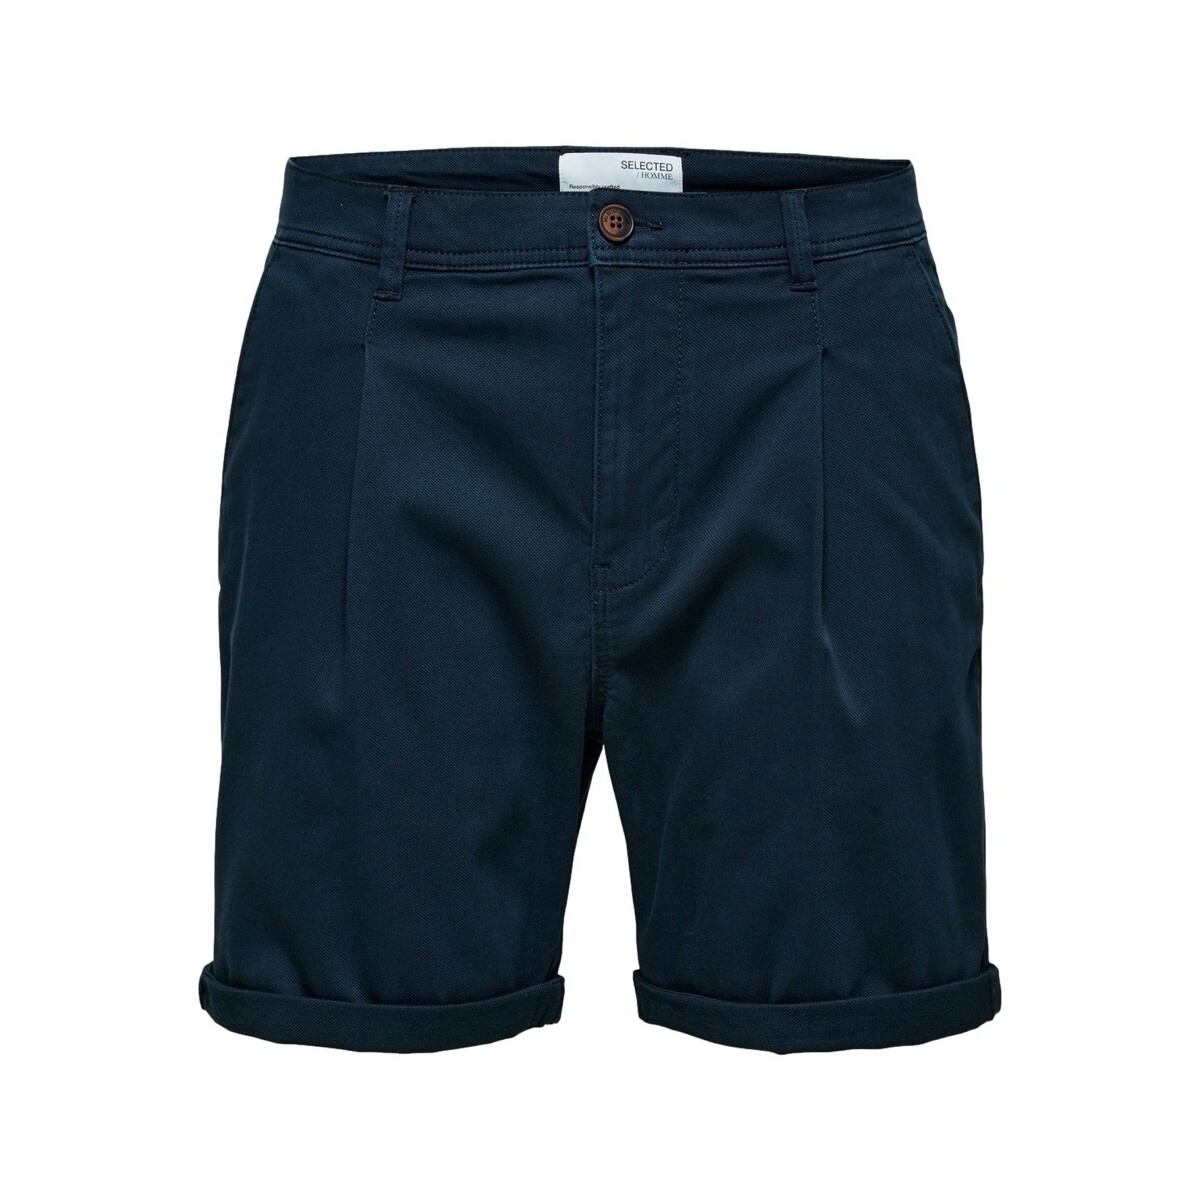 textil Hombre Shorts / Bermudas Selected Noos Comfort-Gabriel - Dark Sapphire Azul